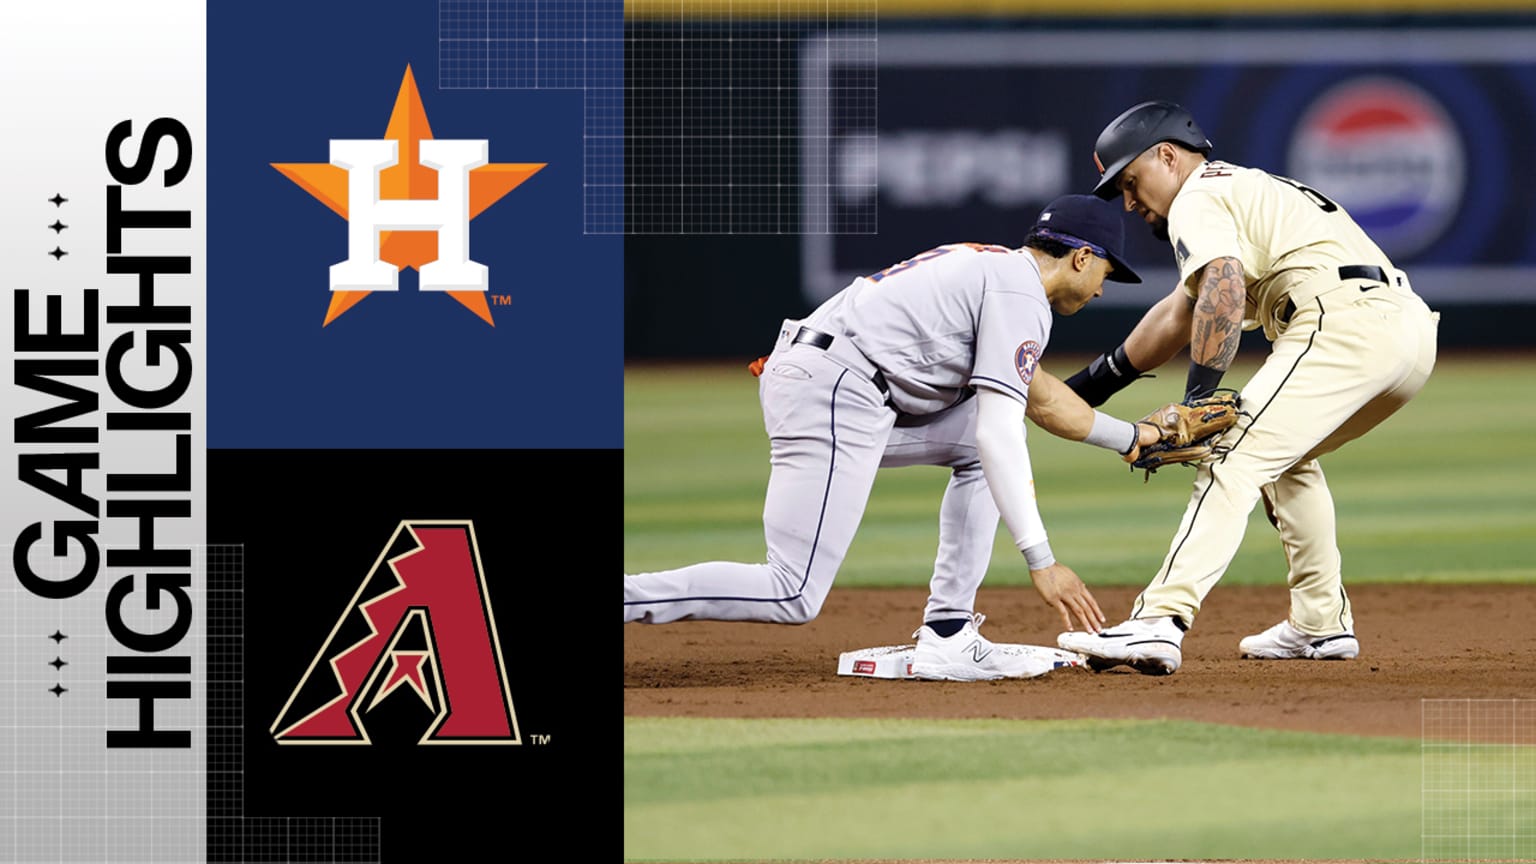 Houston Astros vs Miami marlins HIGHLIGHTS